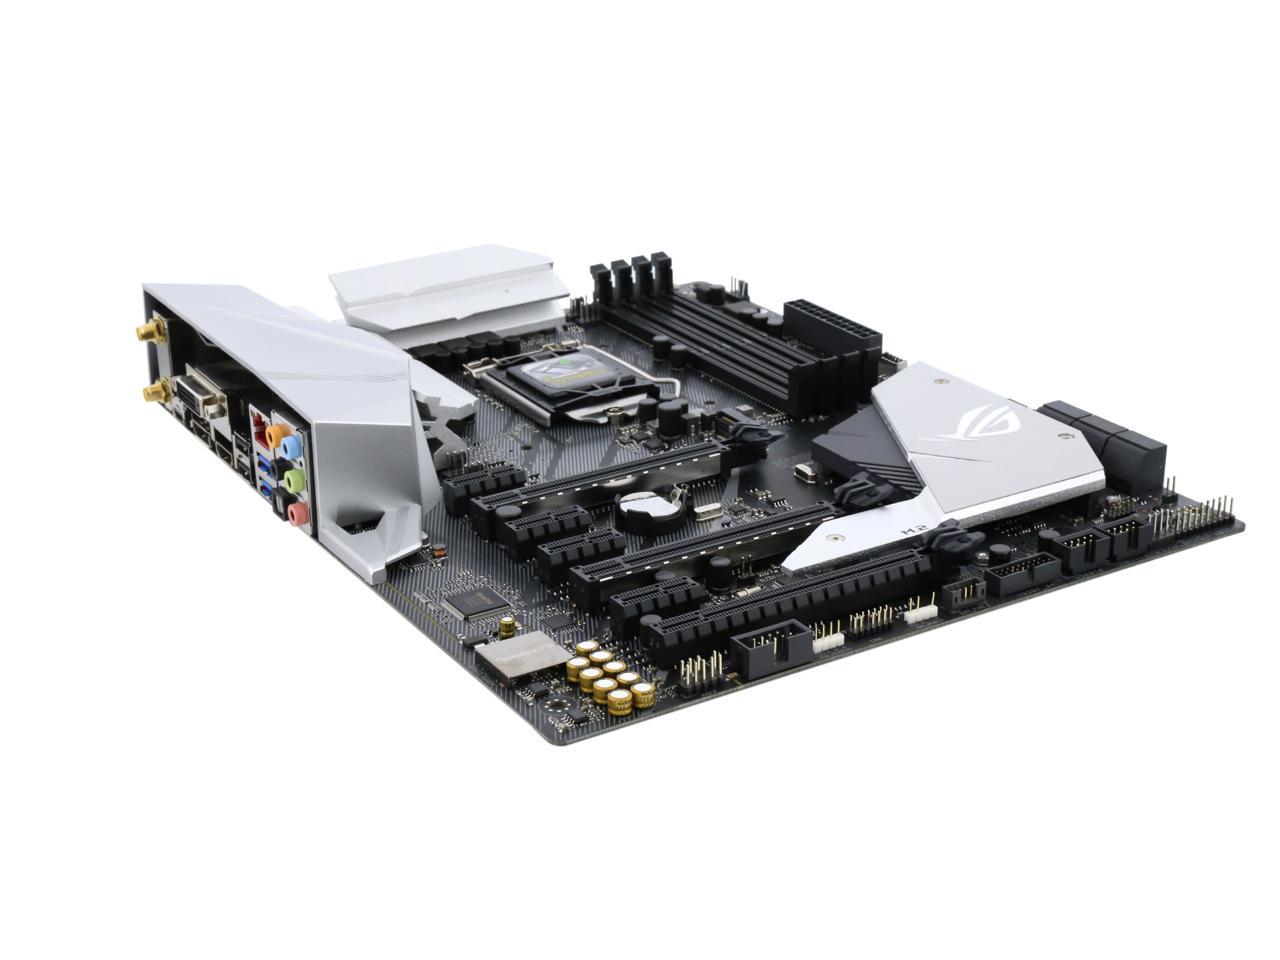 ASUS ROG Strix Z370-E Gaming LGA 1151 (300 Series) ATX Intel